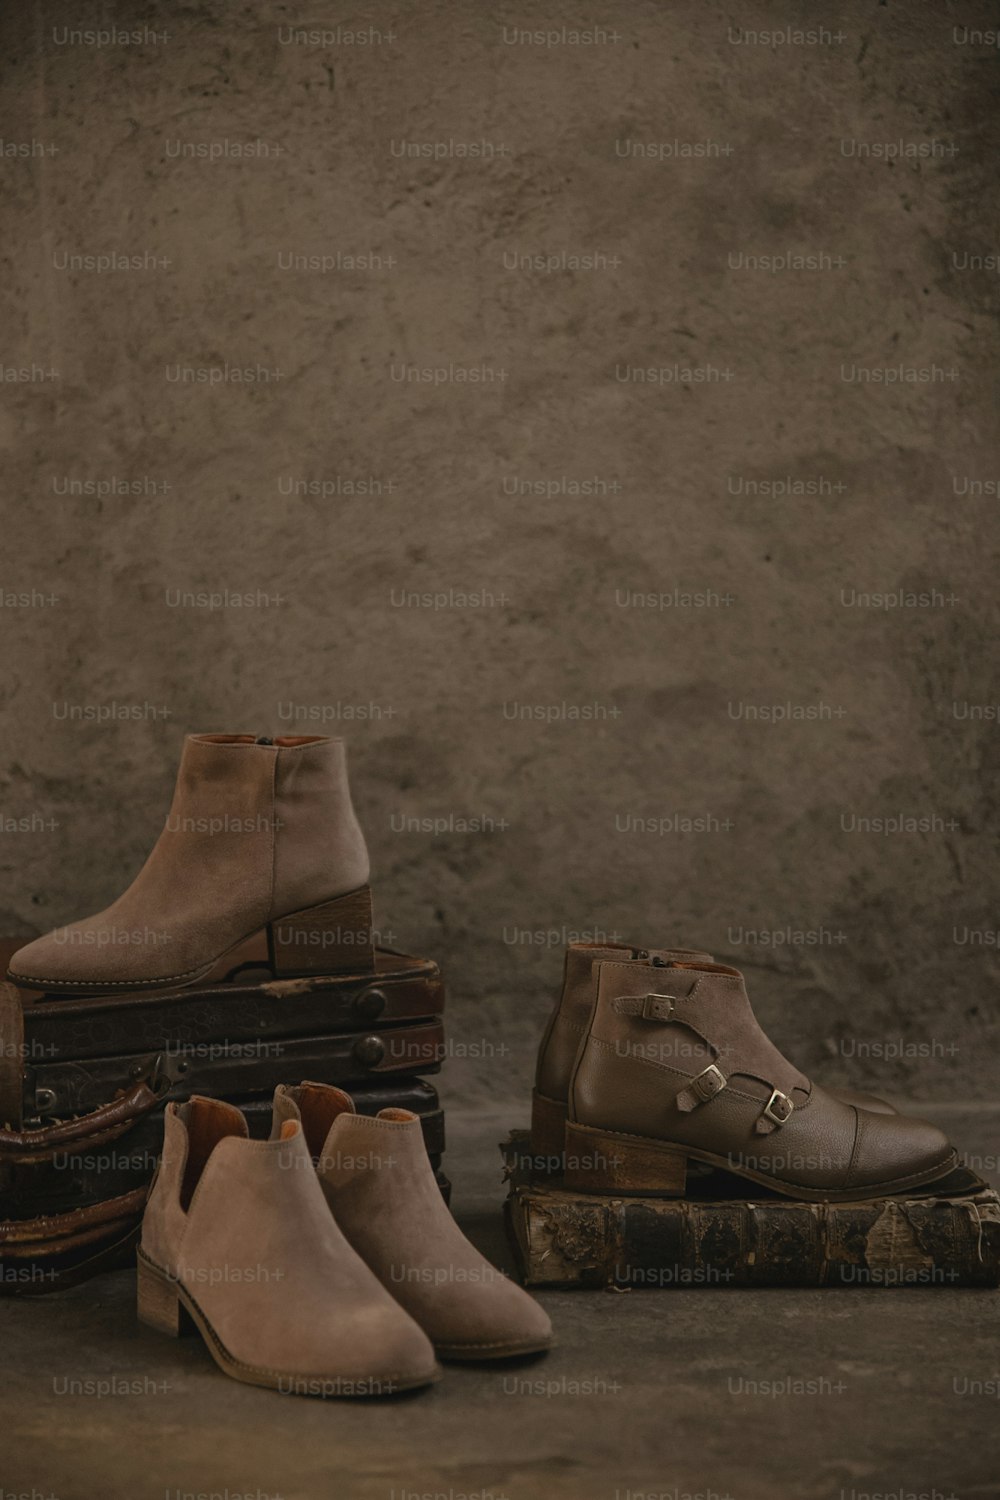 Un gruppo di scarpe sedute sopra una pila di bagagli